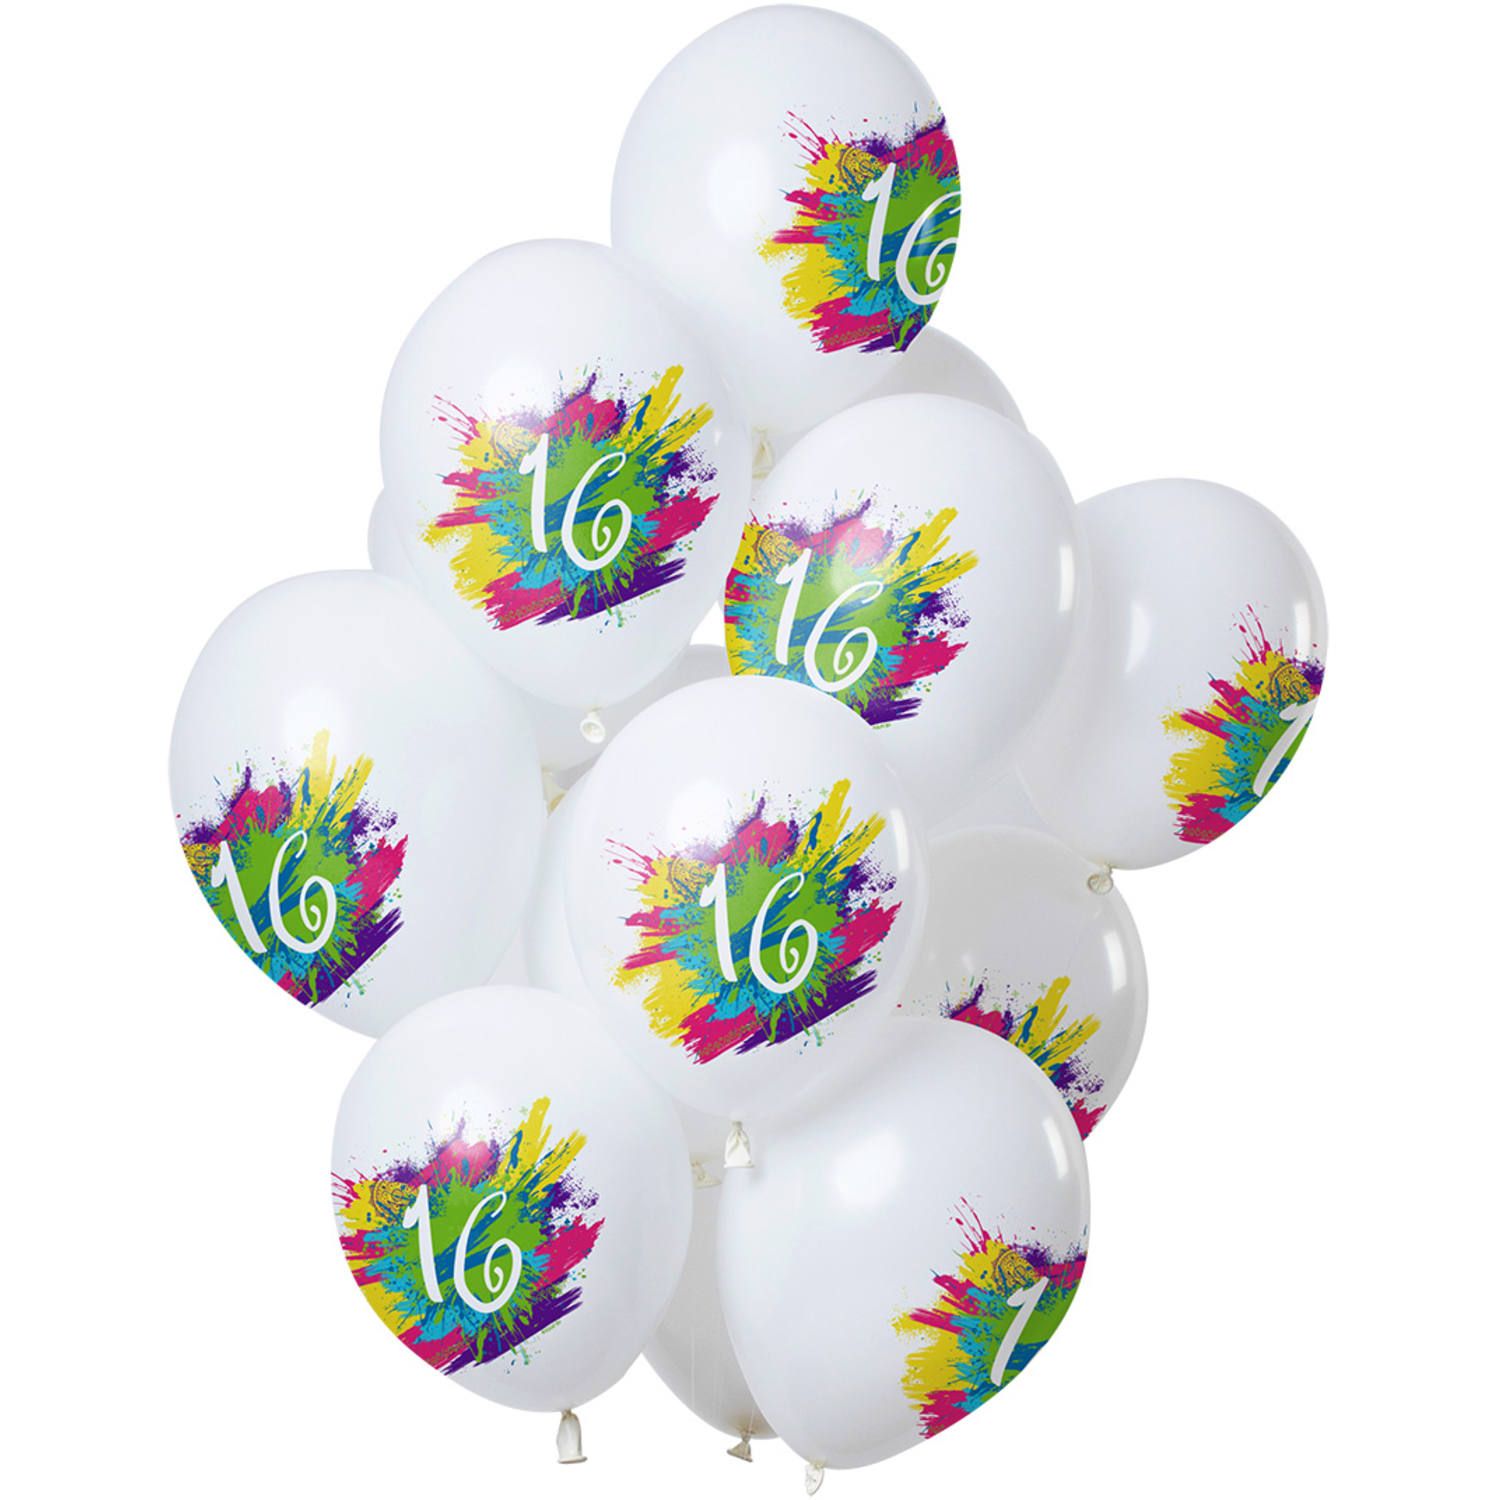 Color splash 16 jaar ballonnen 12 stuks